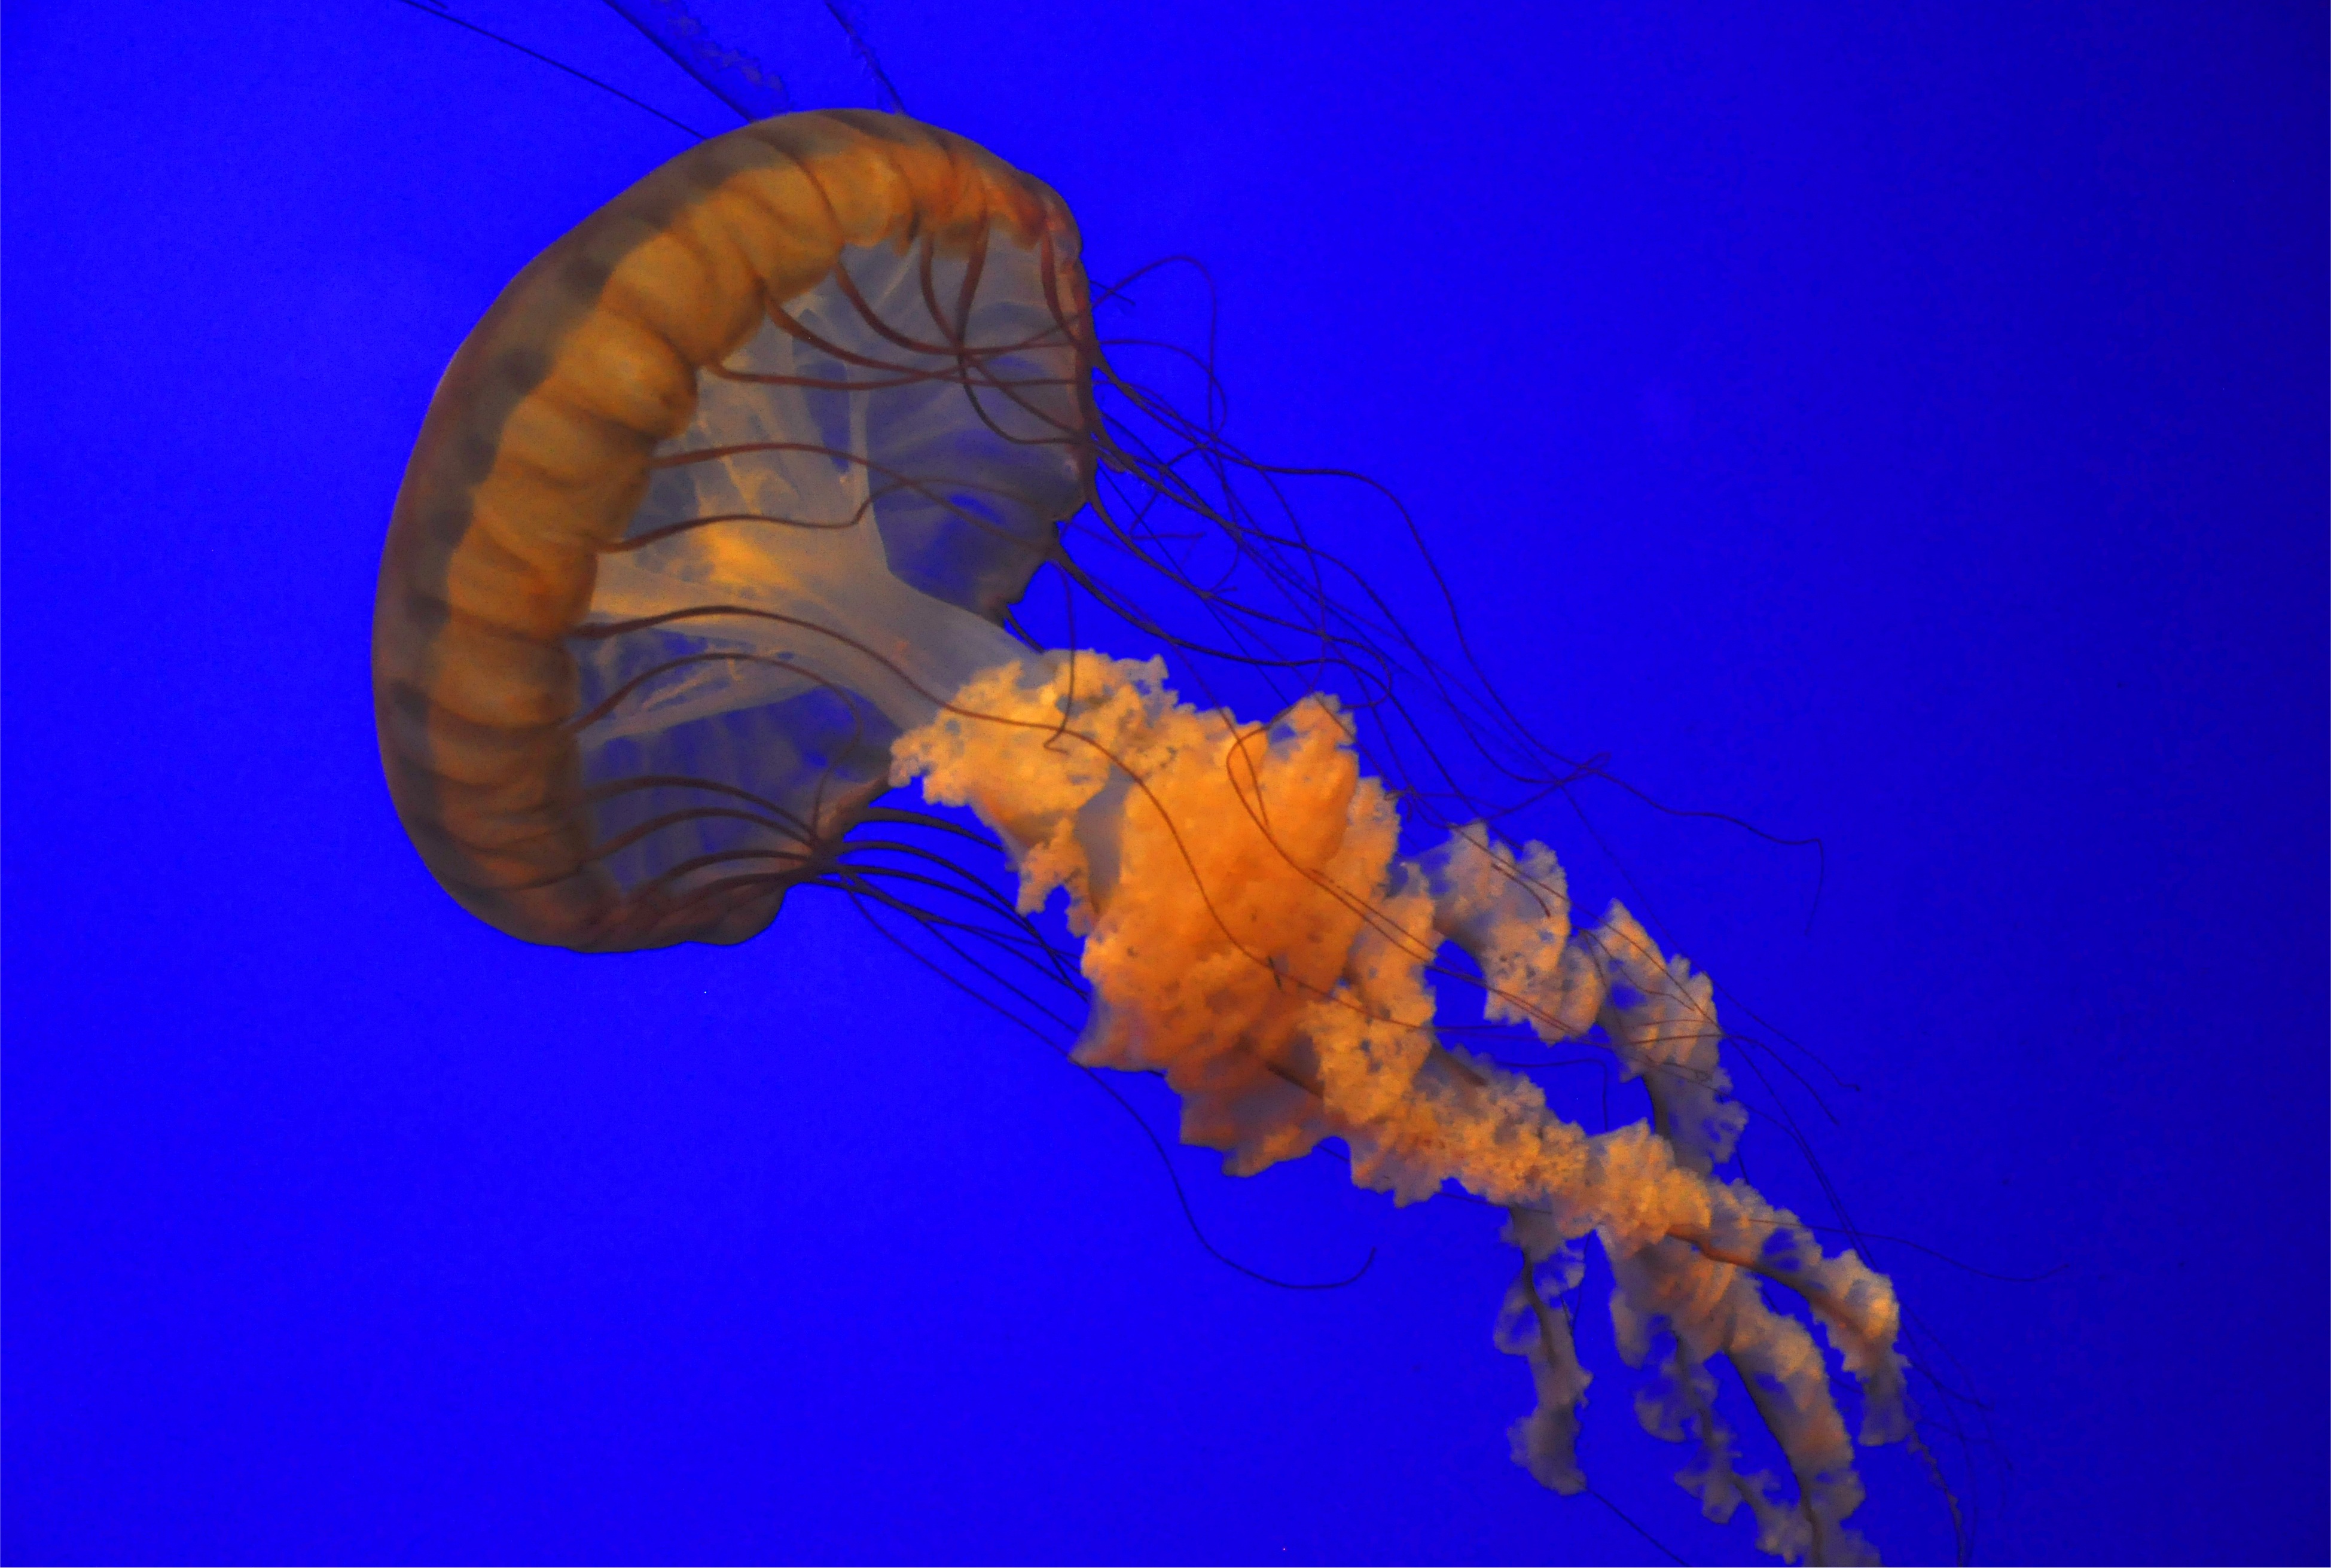 Red Jellyfish free image